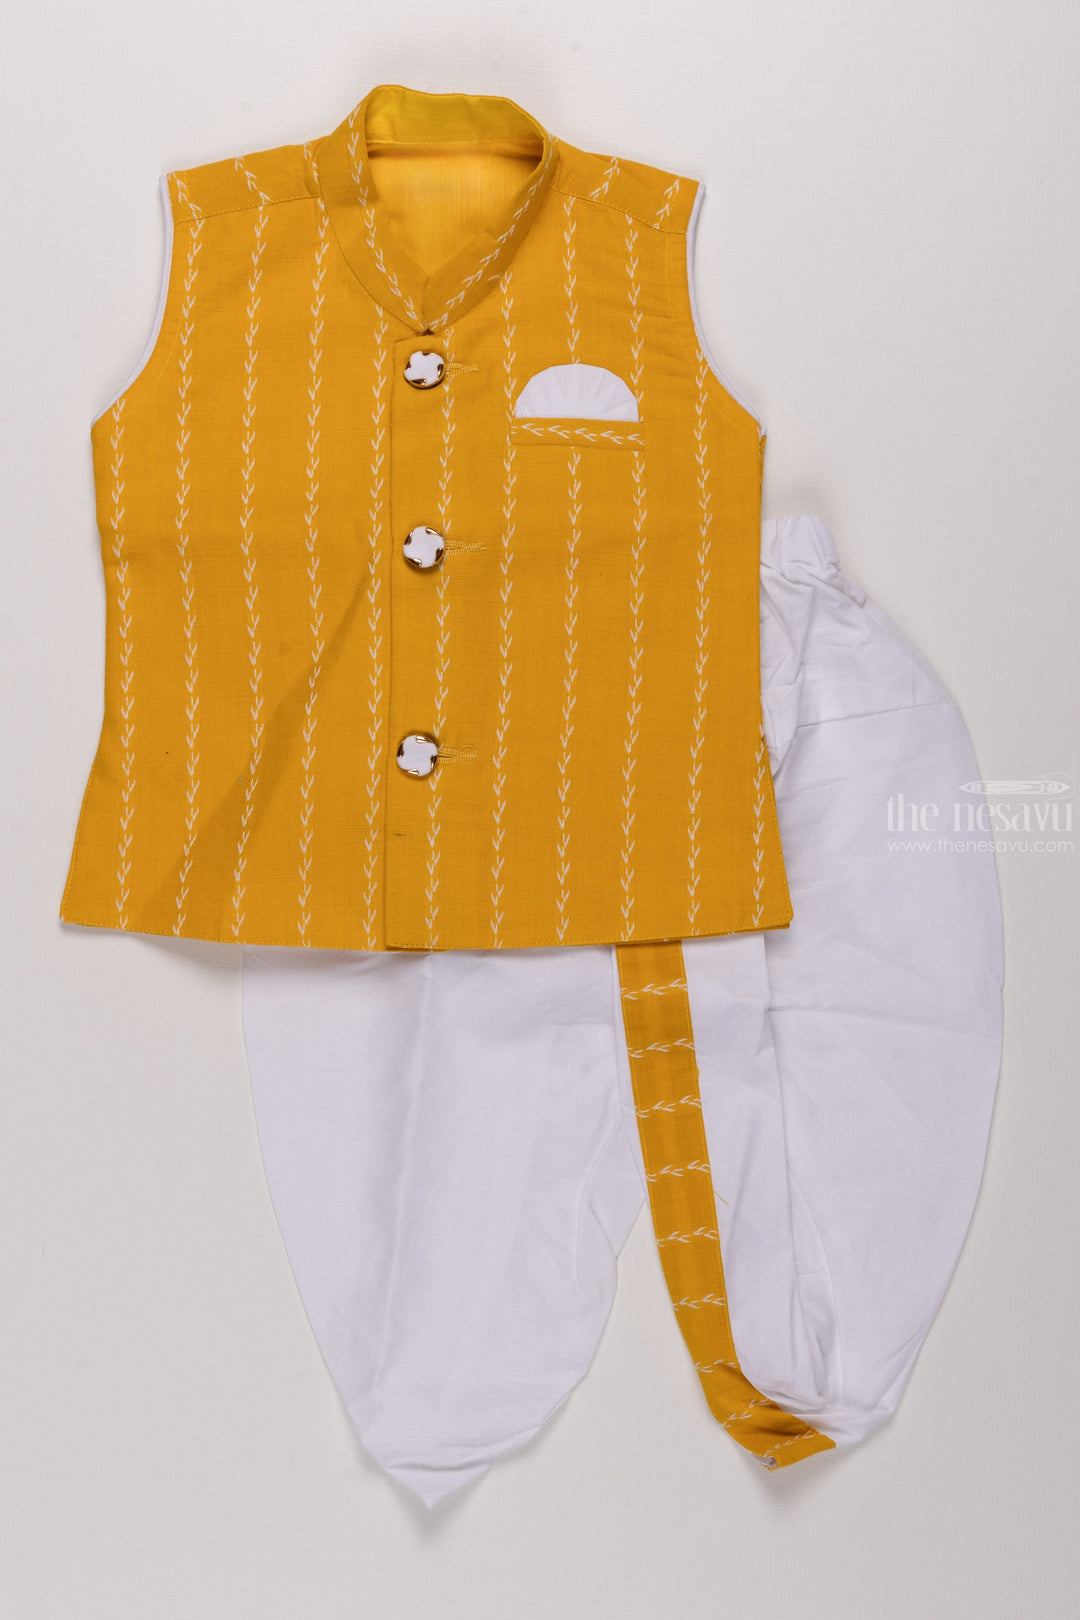 The Nesavu Boys Dothi Set Boys Radiant Yellow Kurta with Elegant Patterns & White Panchagajam Nesavu 14 (6M) / Yellow / Cotton BES436B-14 Boys Yellow Ensemble | Patterned Kurta with White Panchagajam | The Nesavu